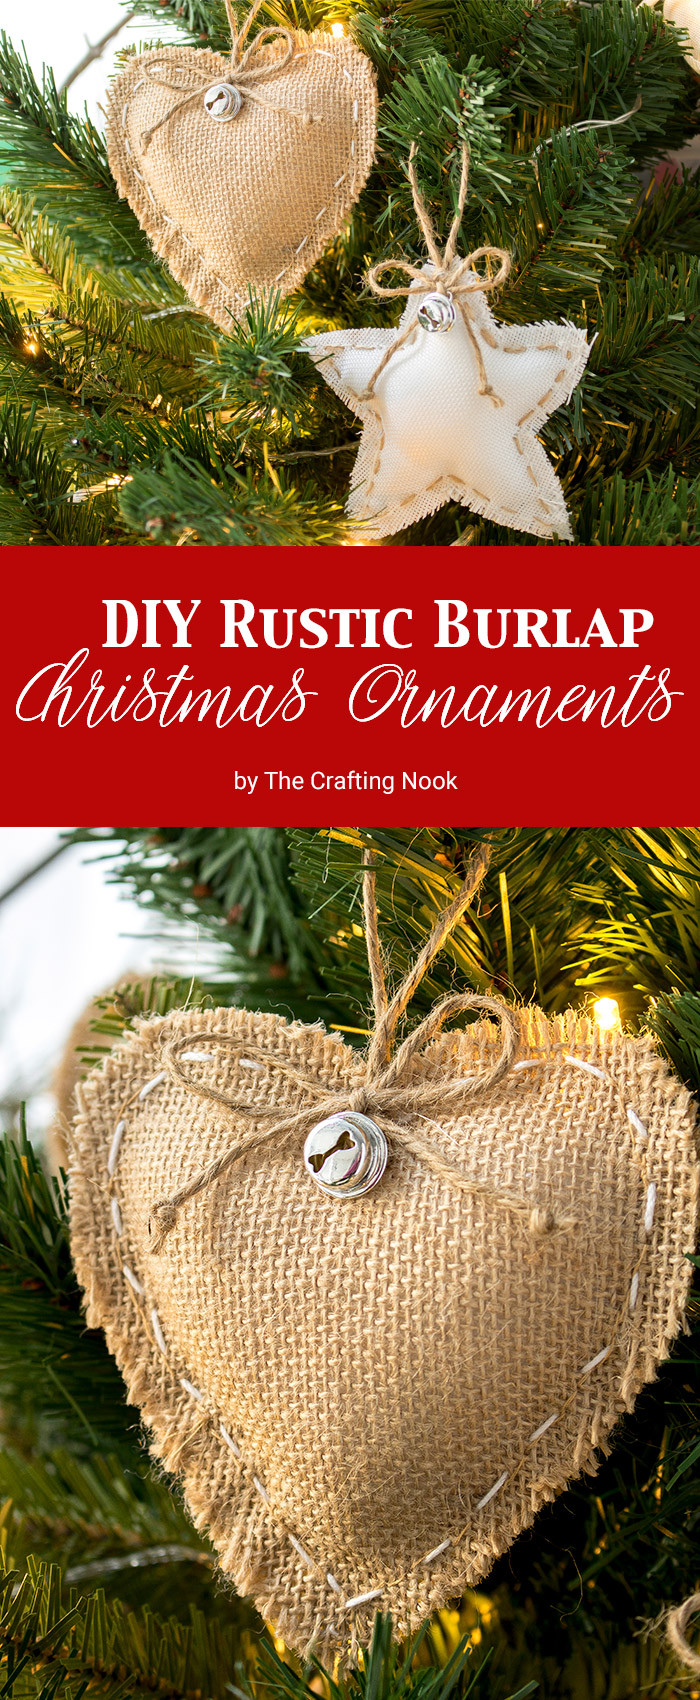 DIY Rustic Christmas Ornaments
 DIY Rustic Burlap Christmas Ornaments with Video Tutorial